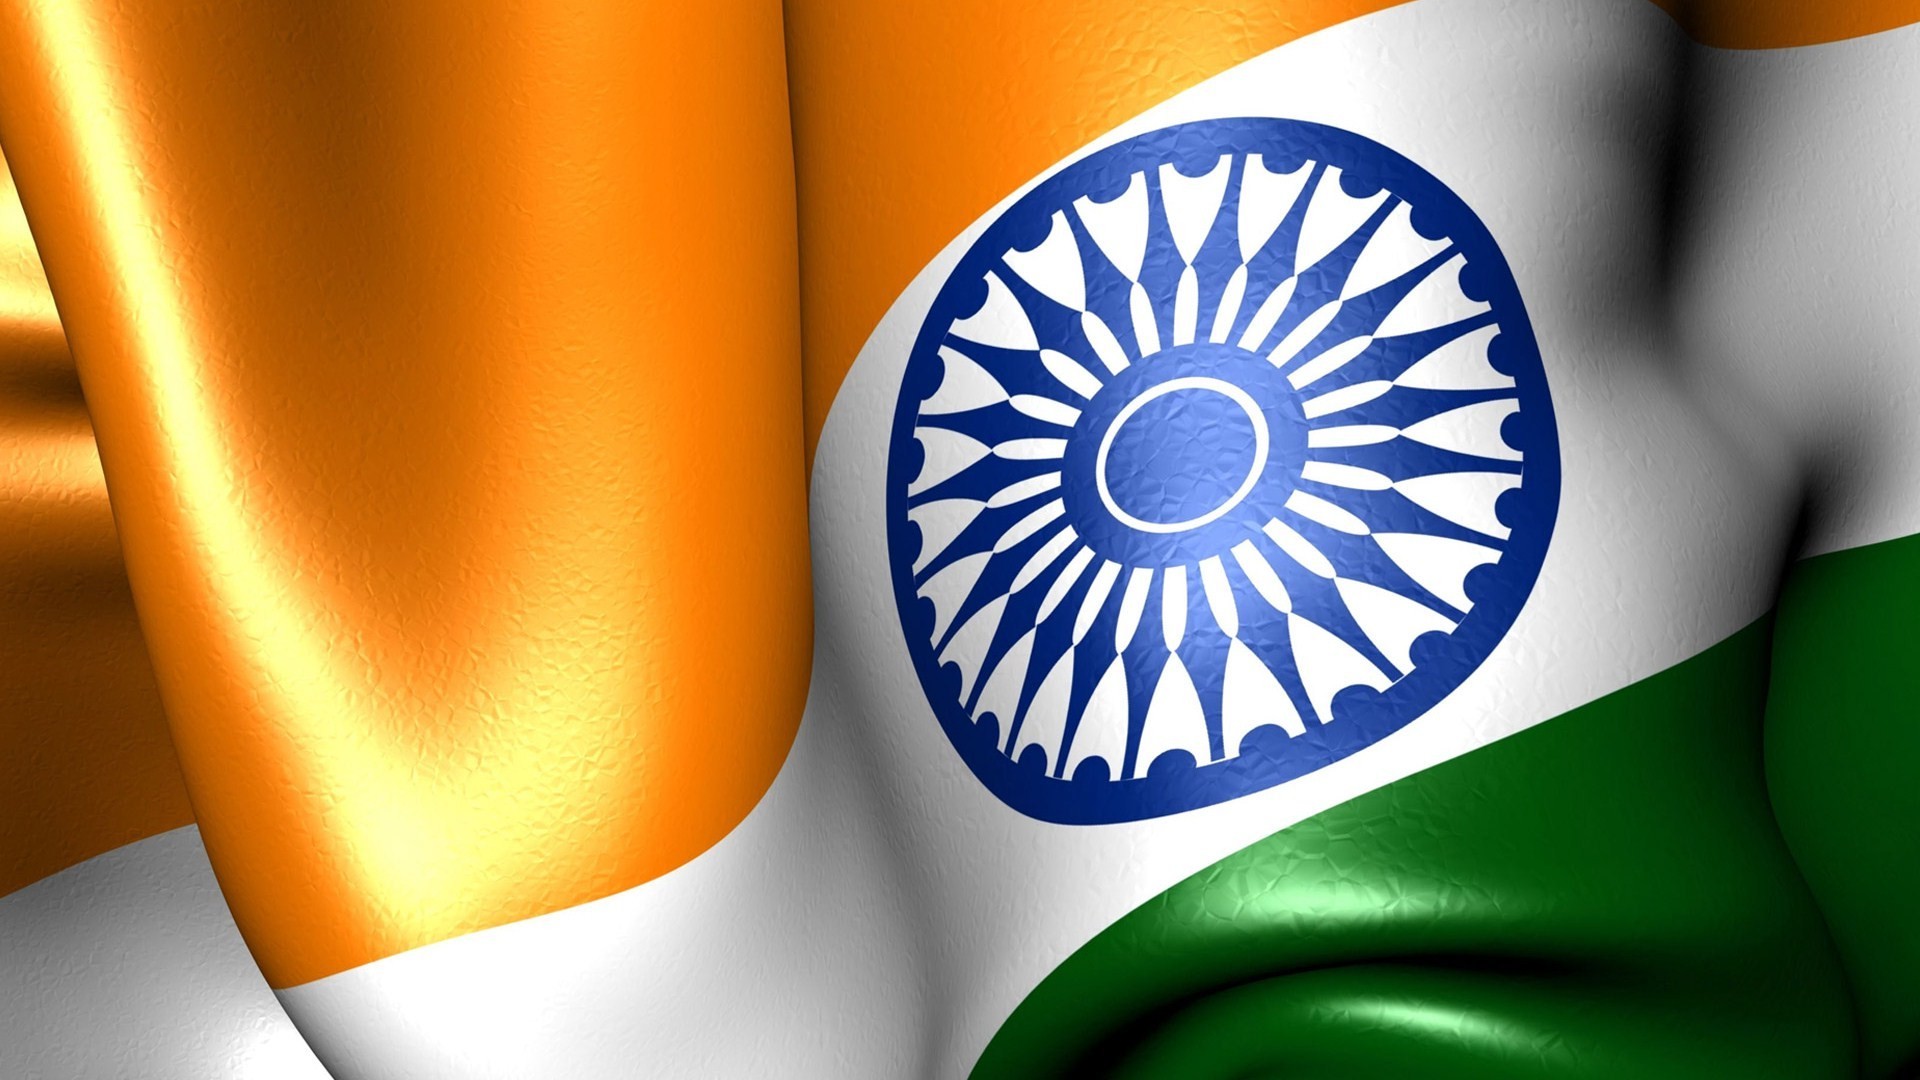 Best 20 Indian flag photos ideas on Pinterest Indian flag pictures, Indian flag history and Cherokee org